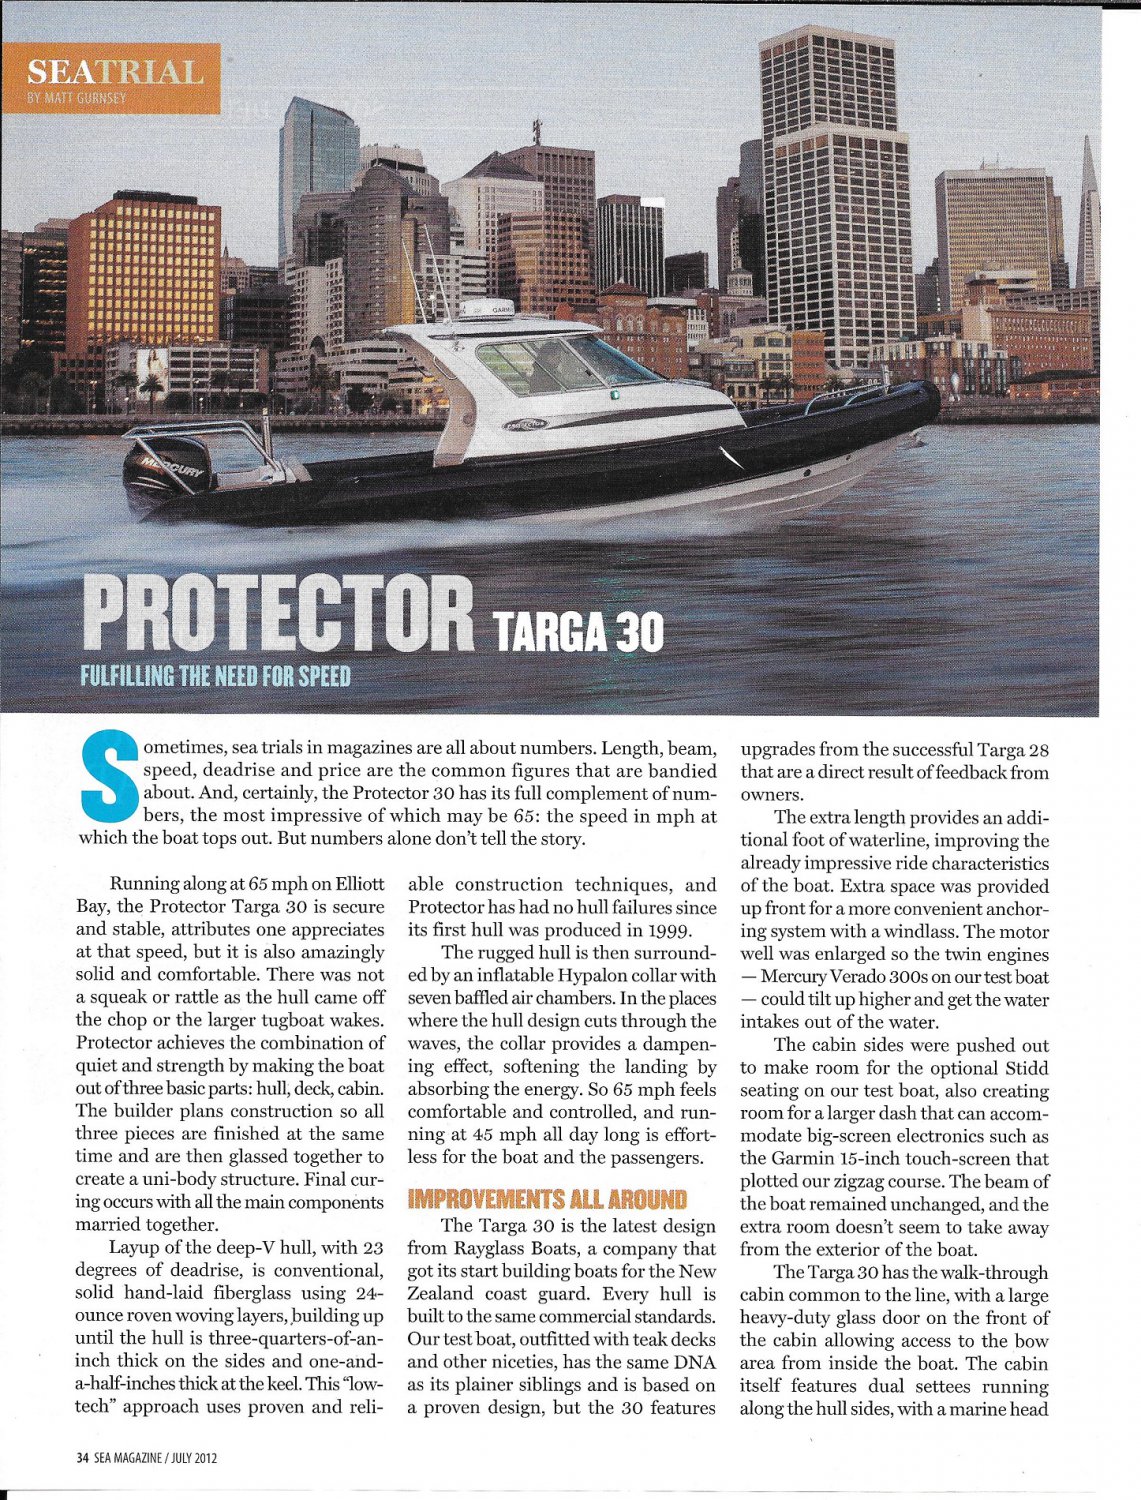 2012 Protector Targa 30 Yacht Review- Nice Photos & Boat Specs